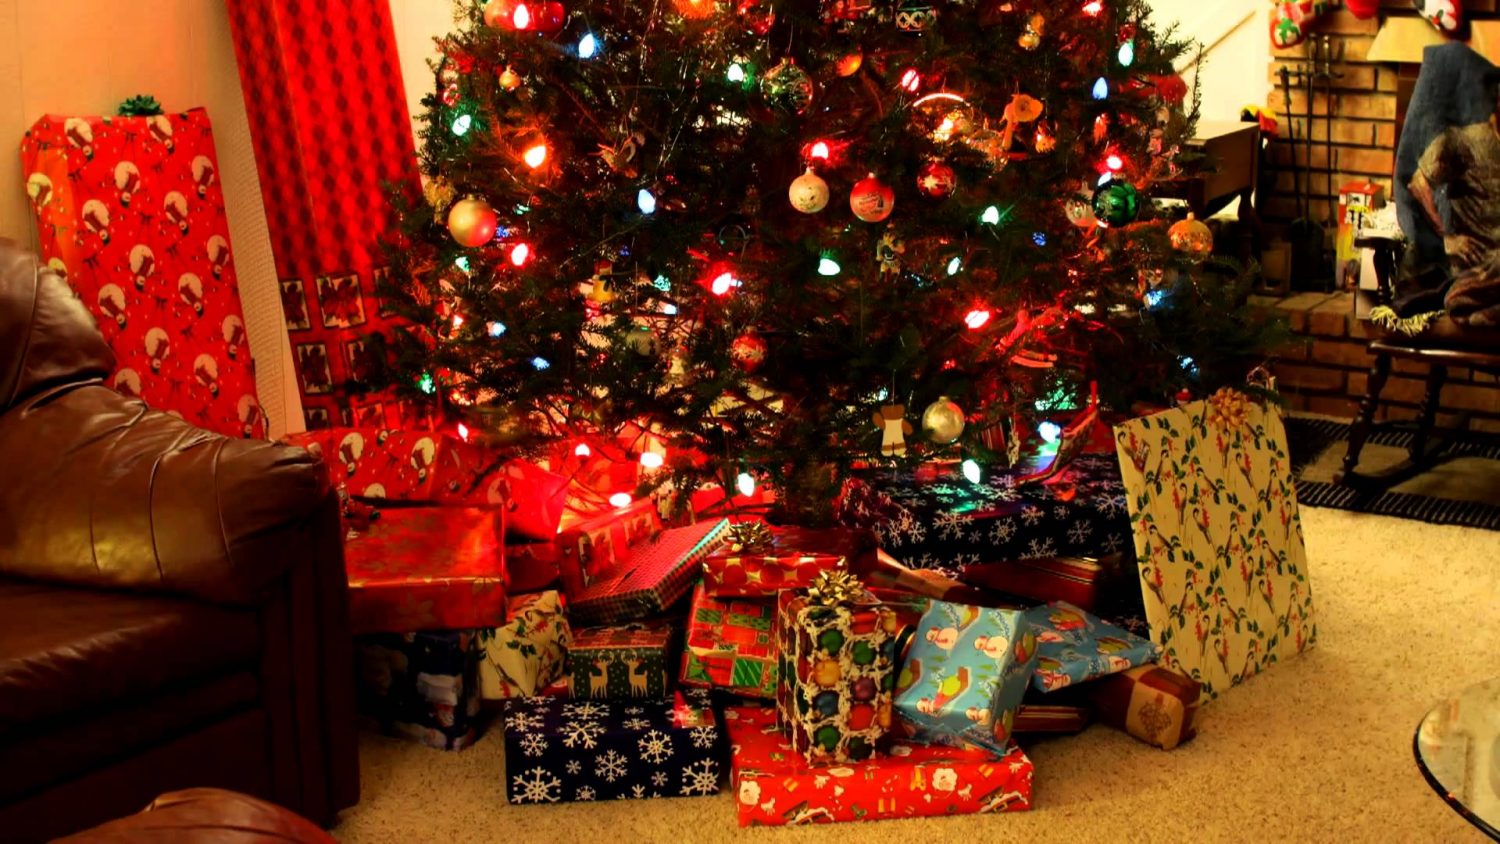 Top Ten Christmas Gifts